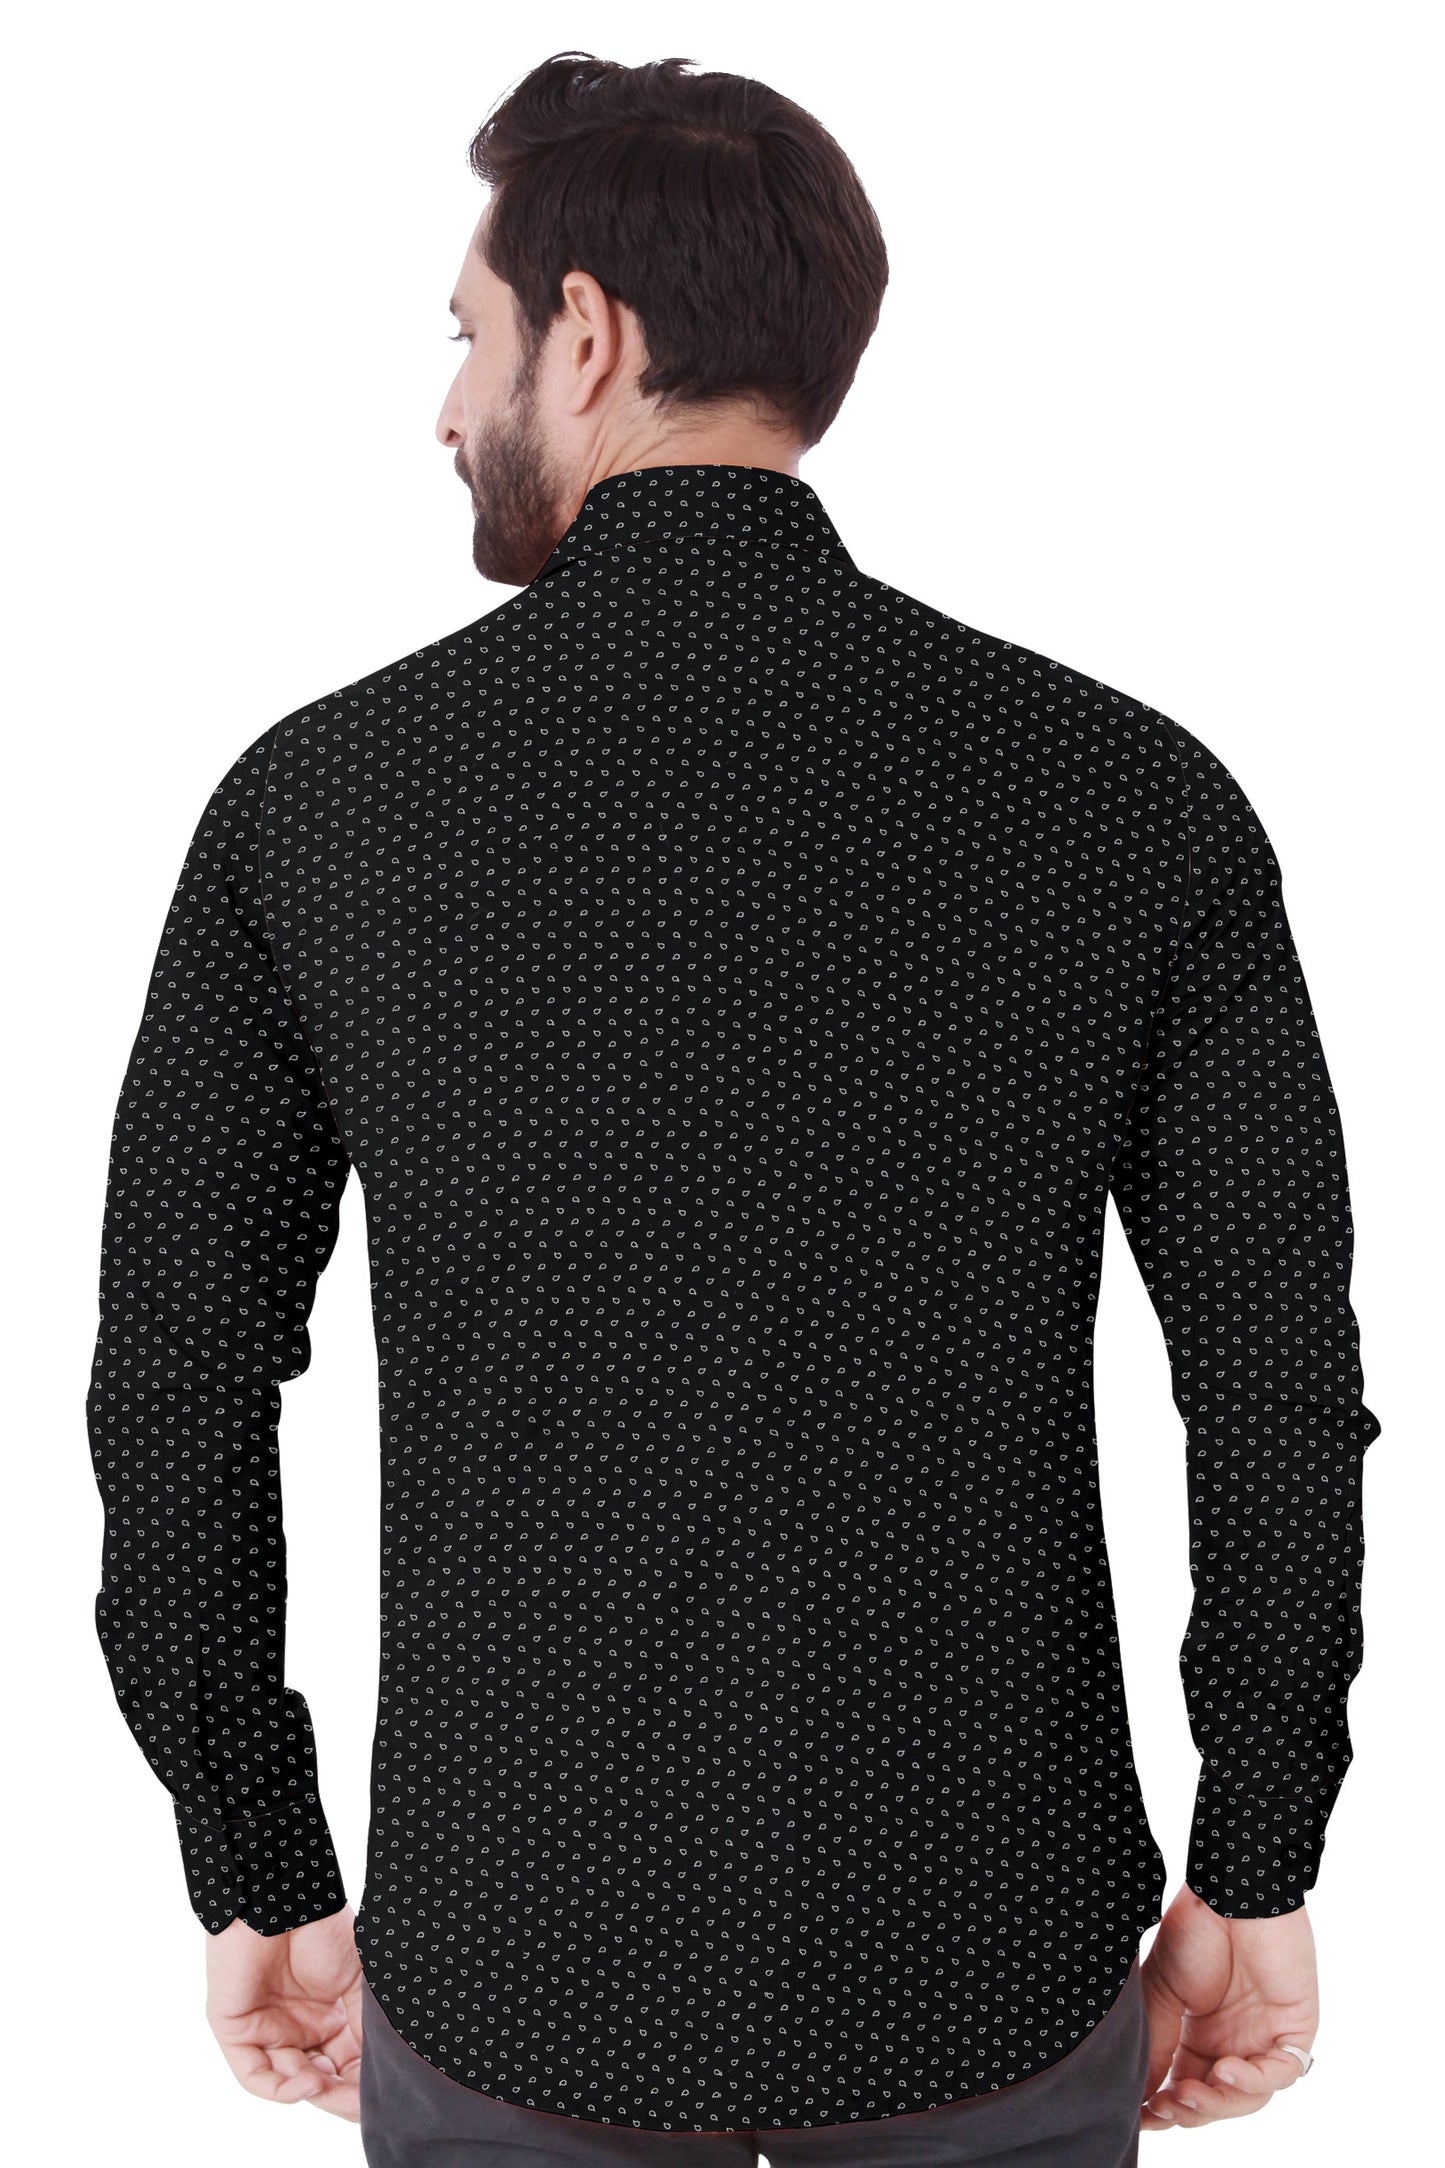 Men's Black Design Casual Shirt Full Sleeves 100% Cotton - Styleflea